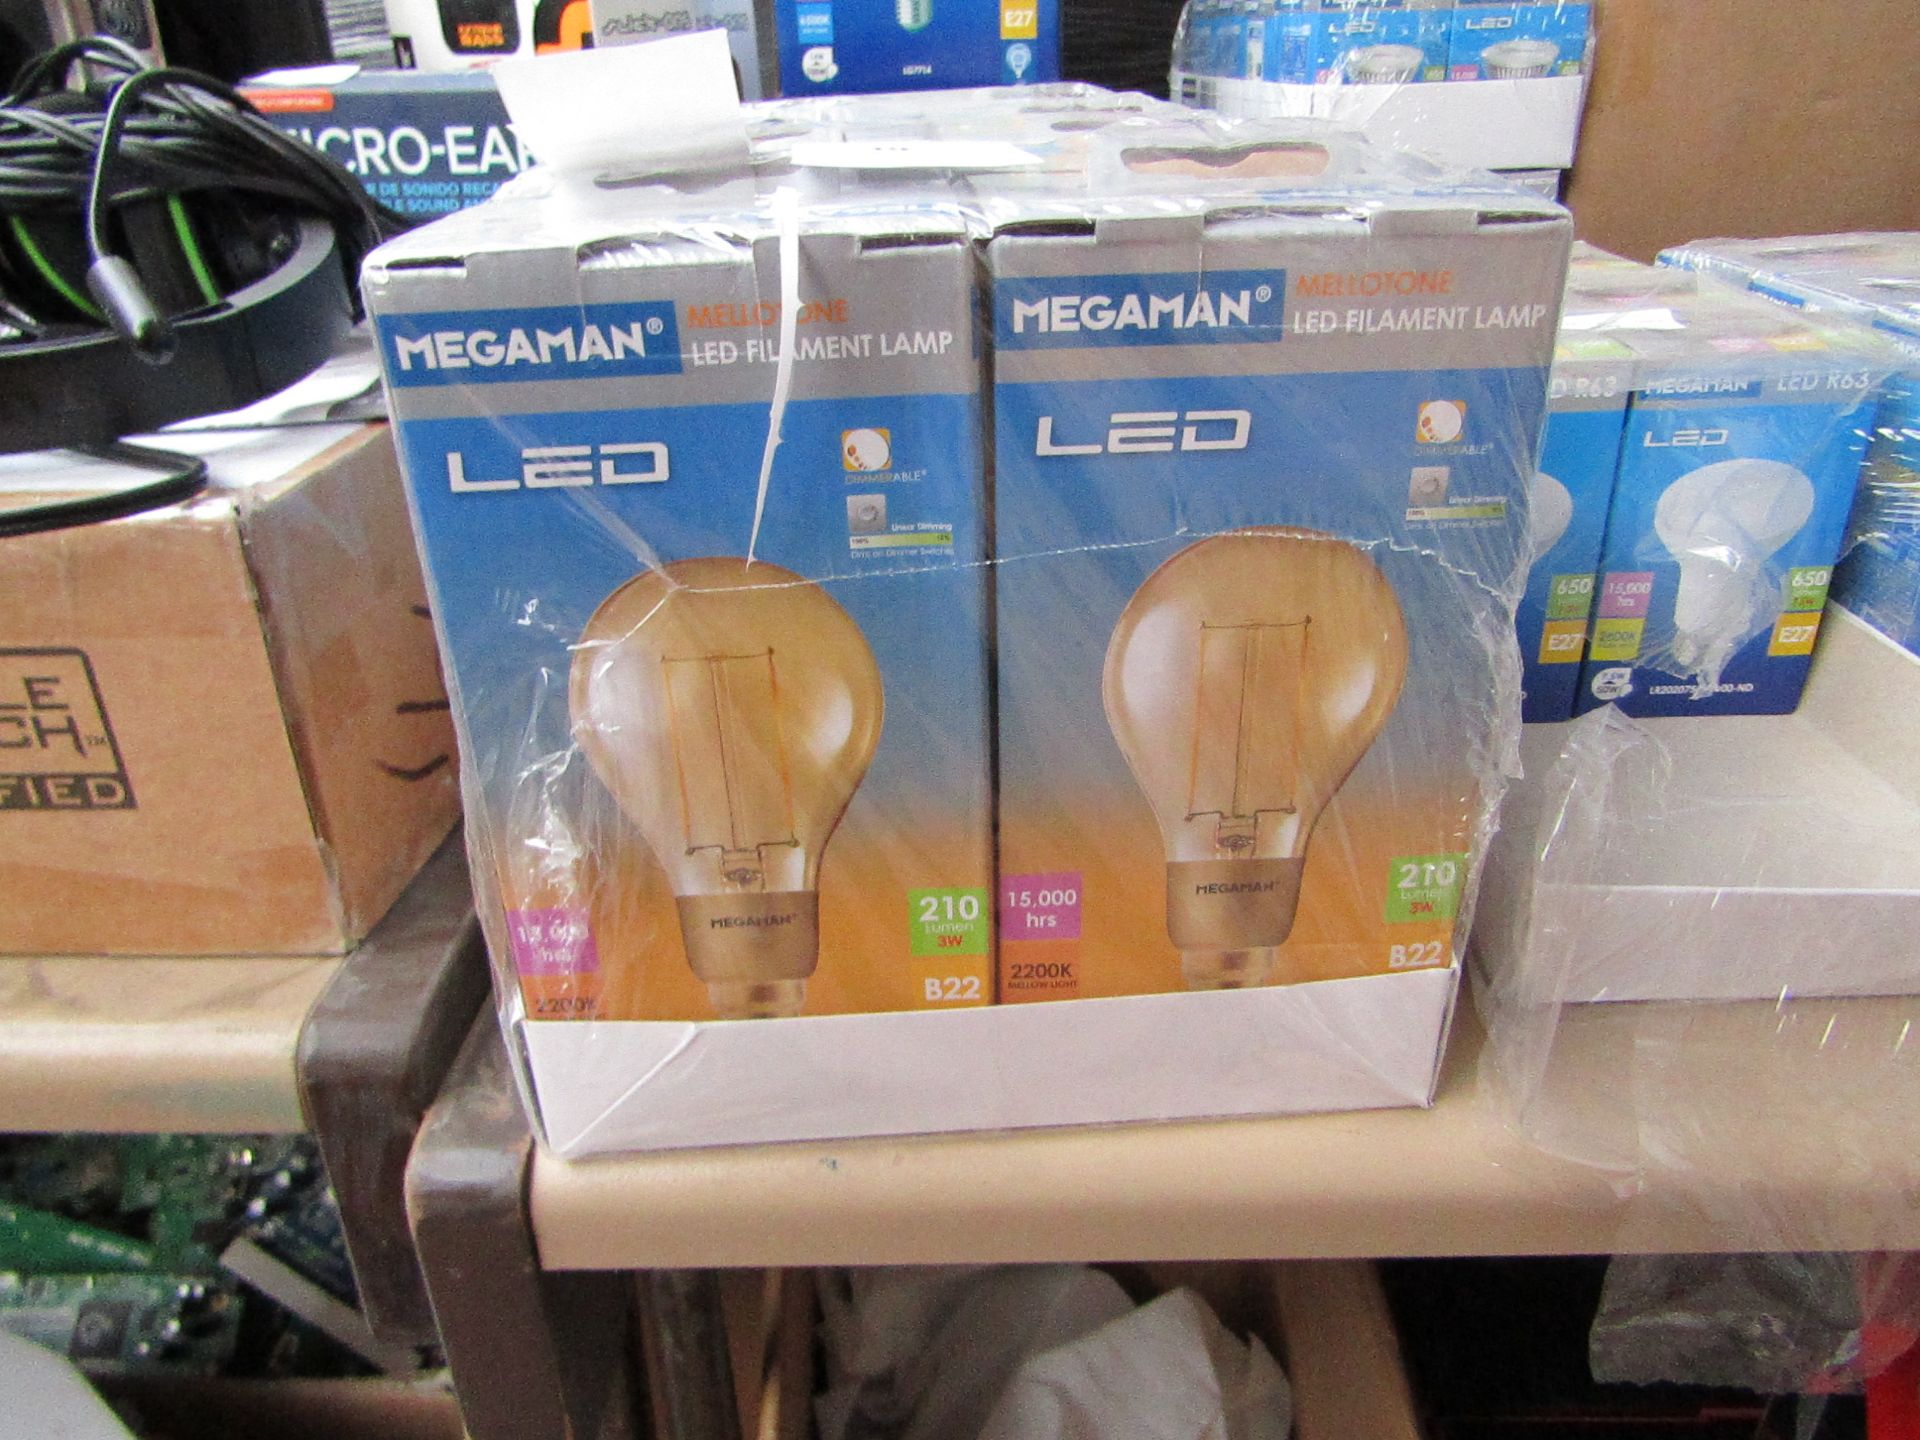 1x Megaman LED Filament bulb, new and boxed. 15,000Hrs / B22 / 210 Lumens